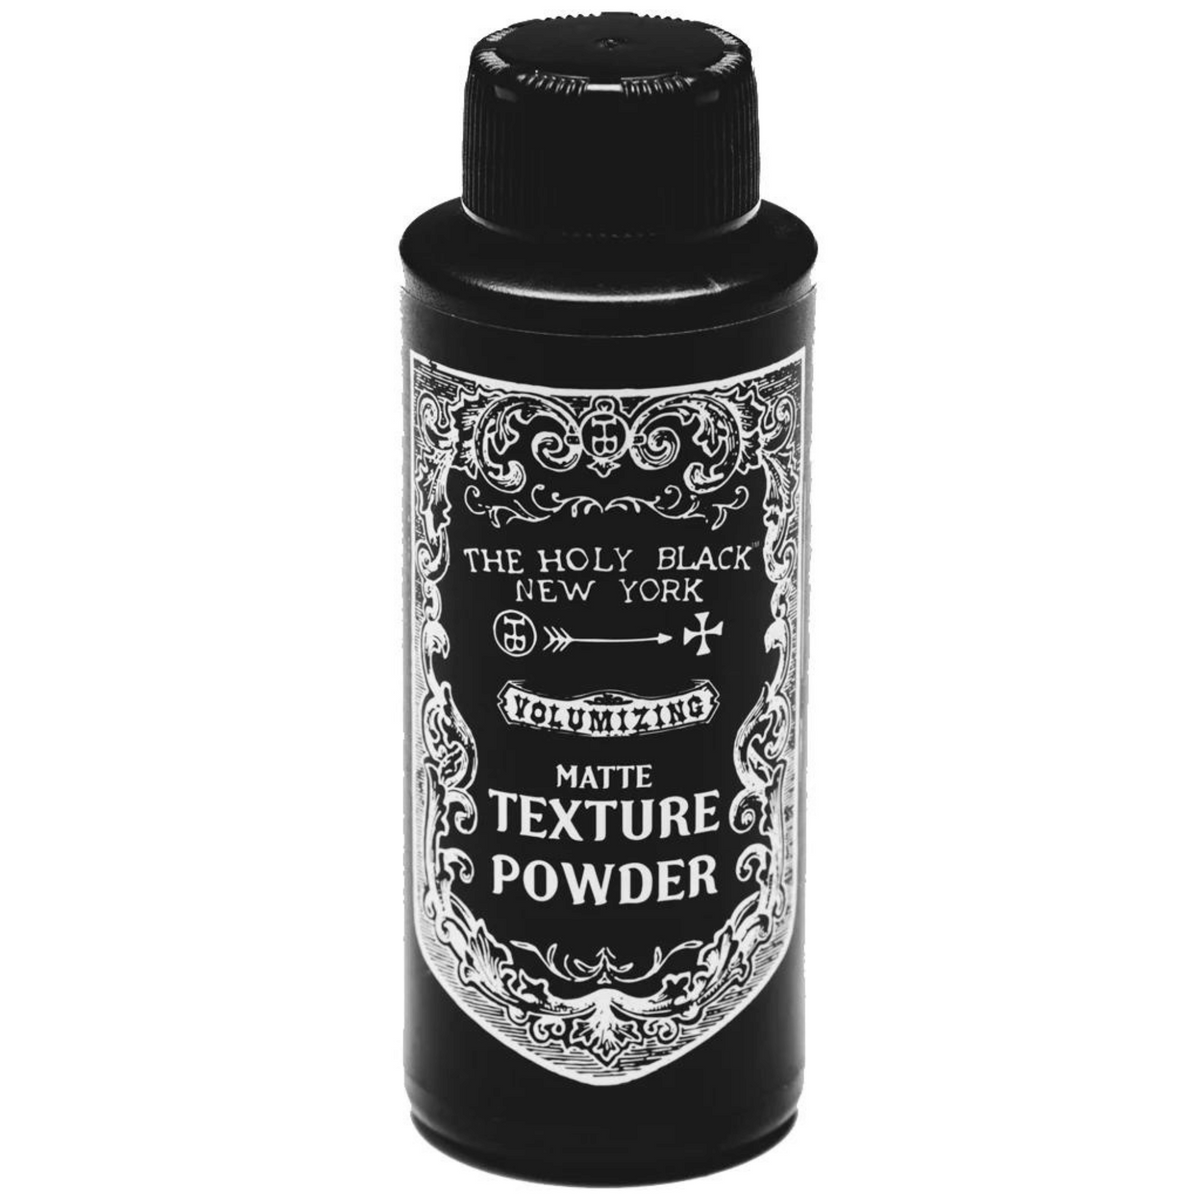 Primary Image of Volumizing Matte Texture Powder